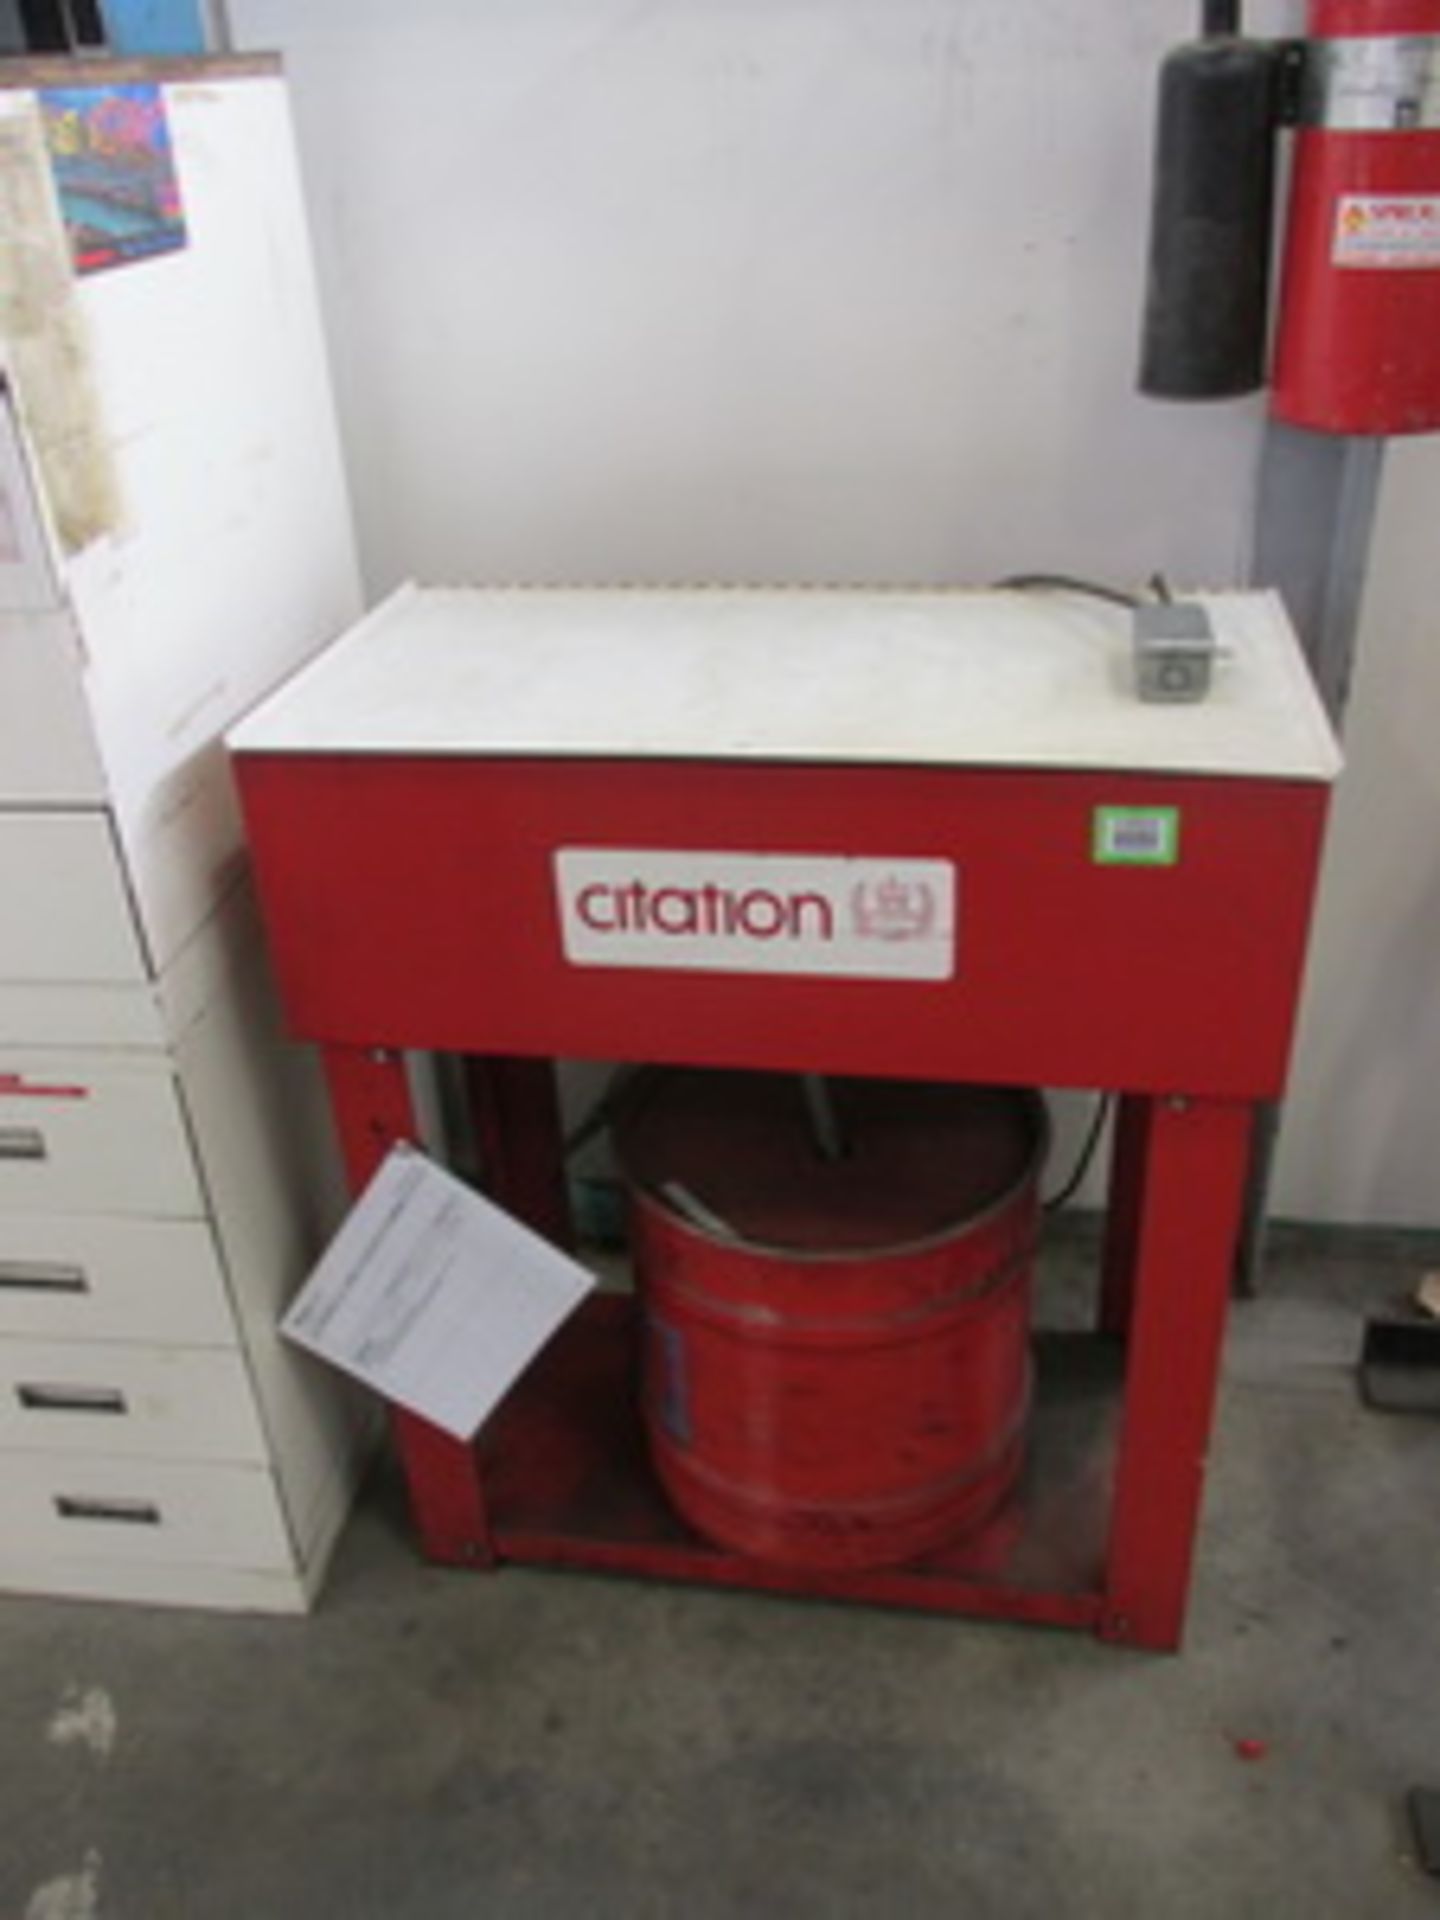 Citation Solvent Parts Washer